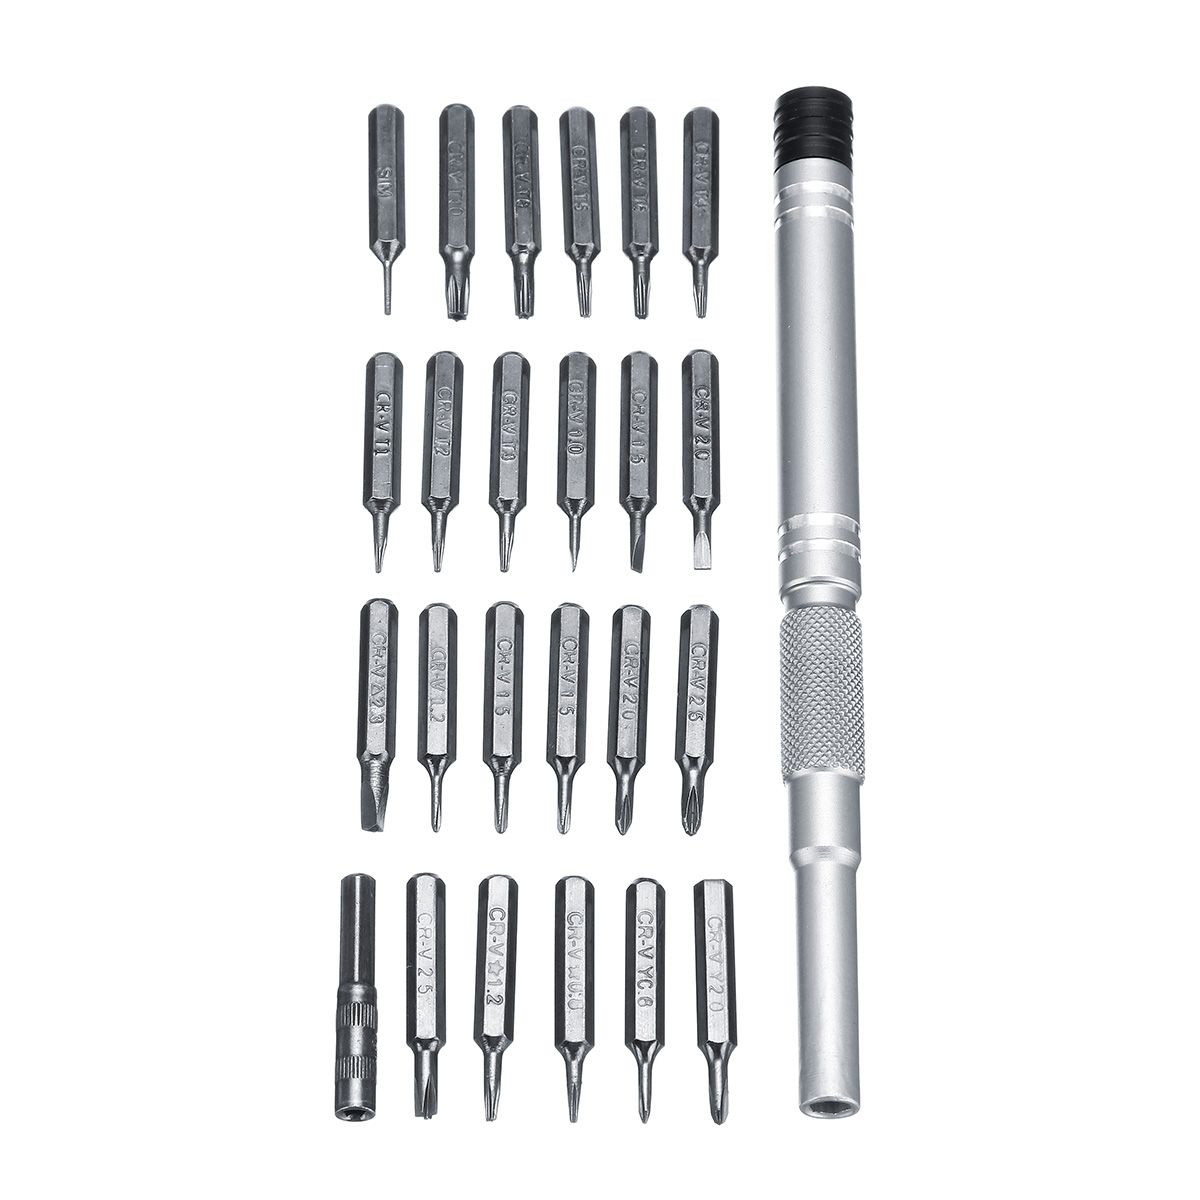 25-In-1-Multi-Tool-Magnetic-Precision-Screwdriver-Set-Aluminum-Alloy-Case-Repair-Kit-1443380